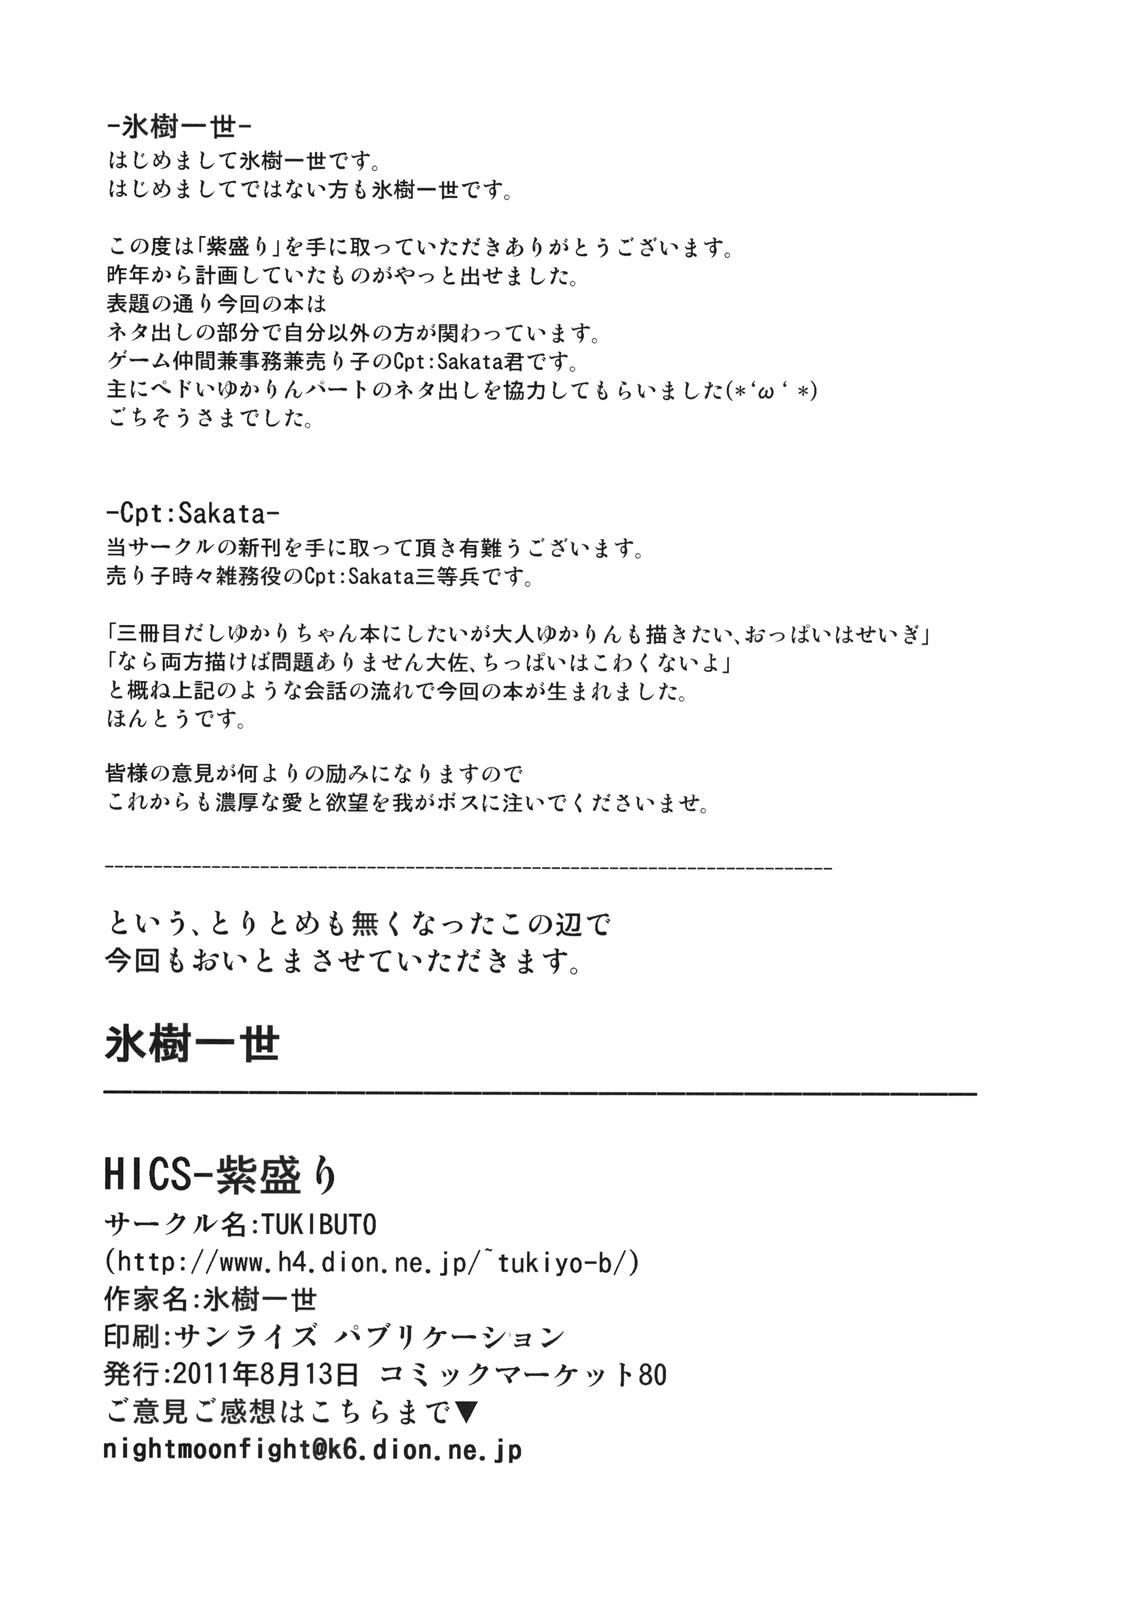 HICS-Yukari Mori 26